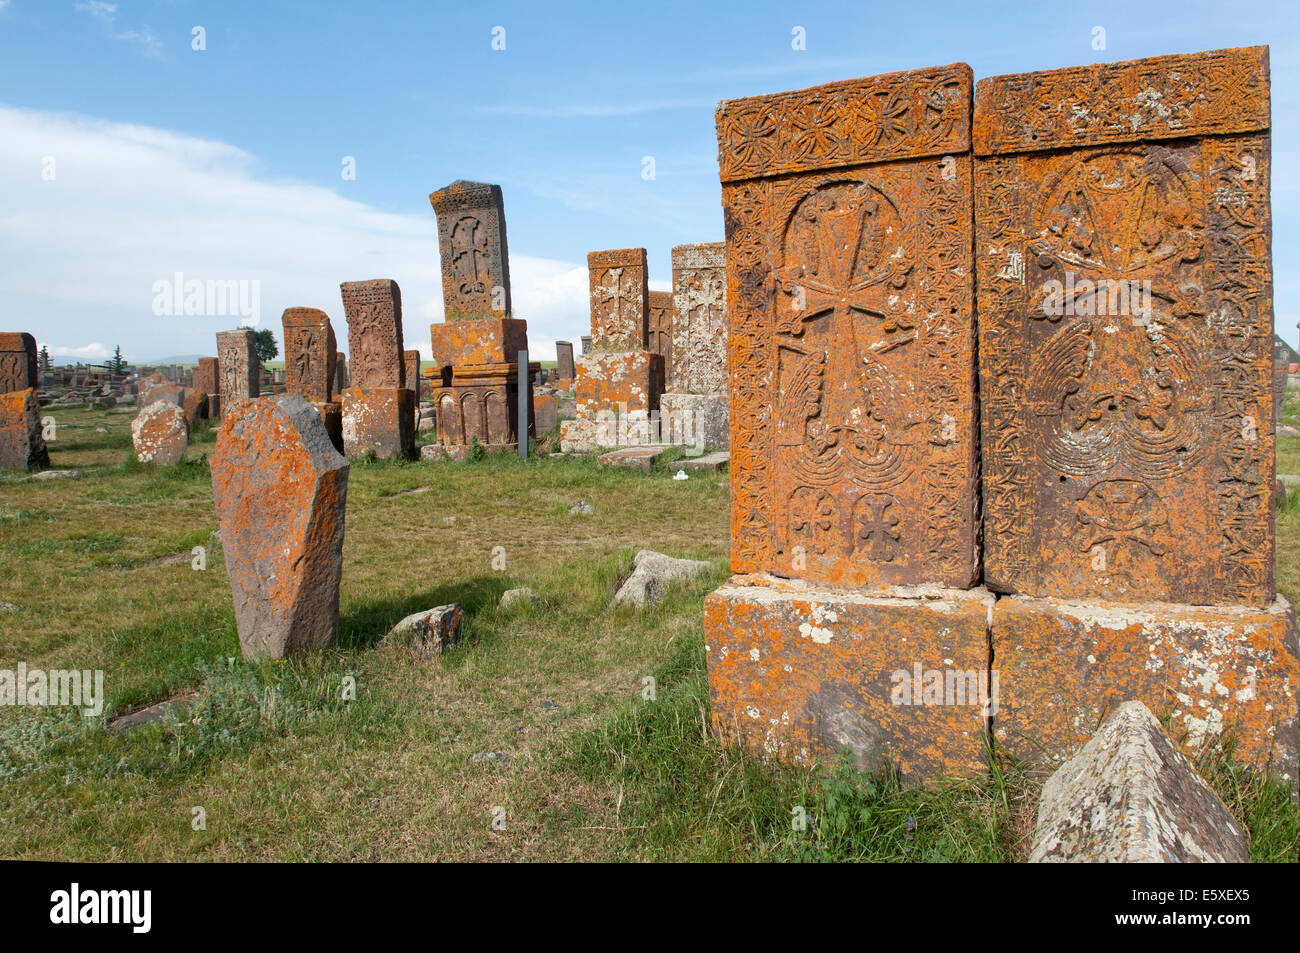 Engraved tombs and khachkars, Noratus cemetery, Armenia Stock Photo